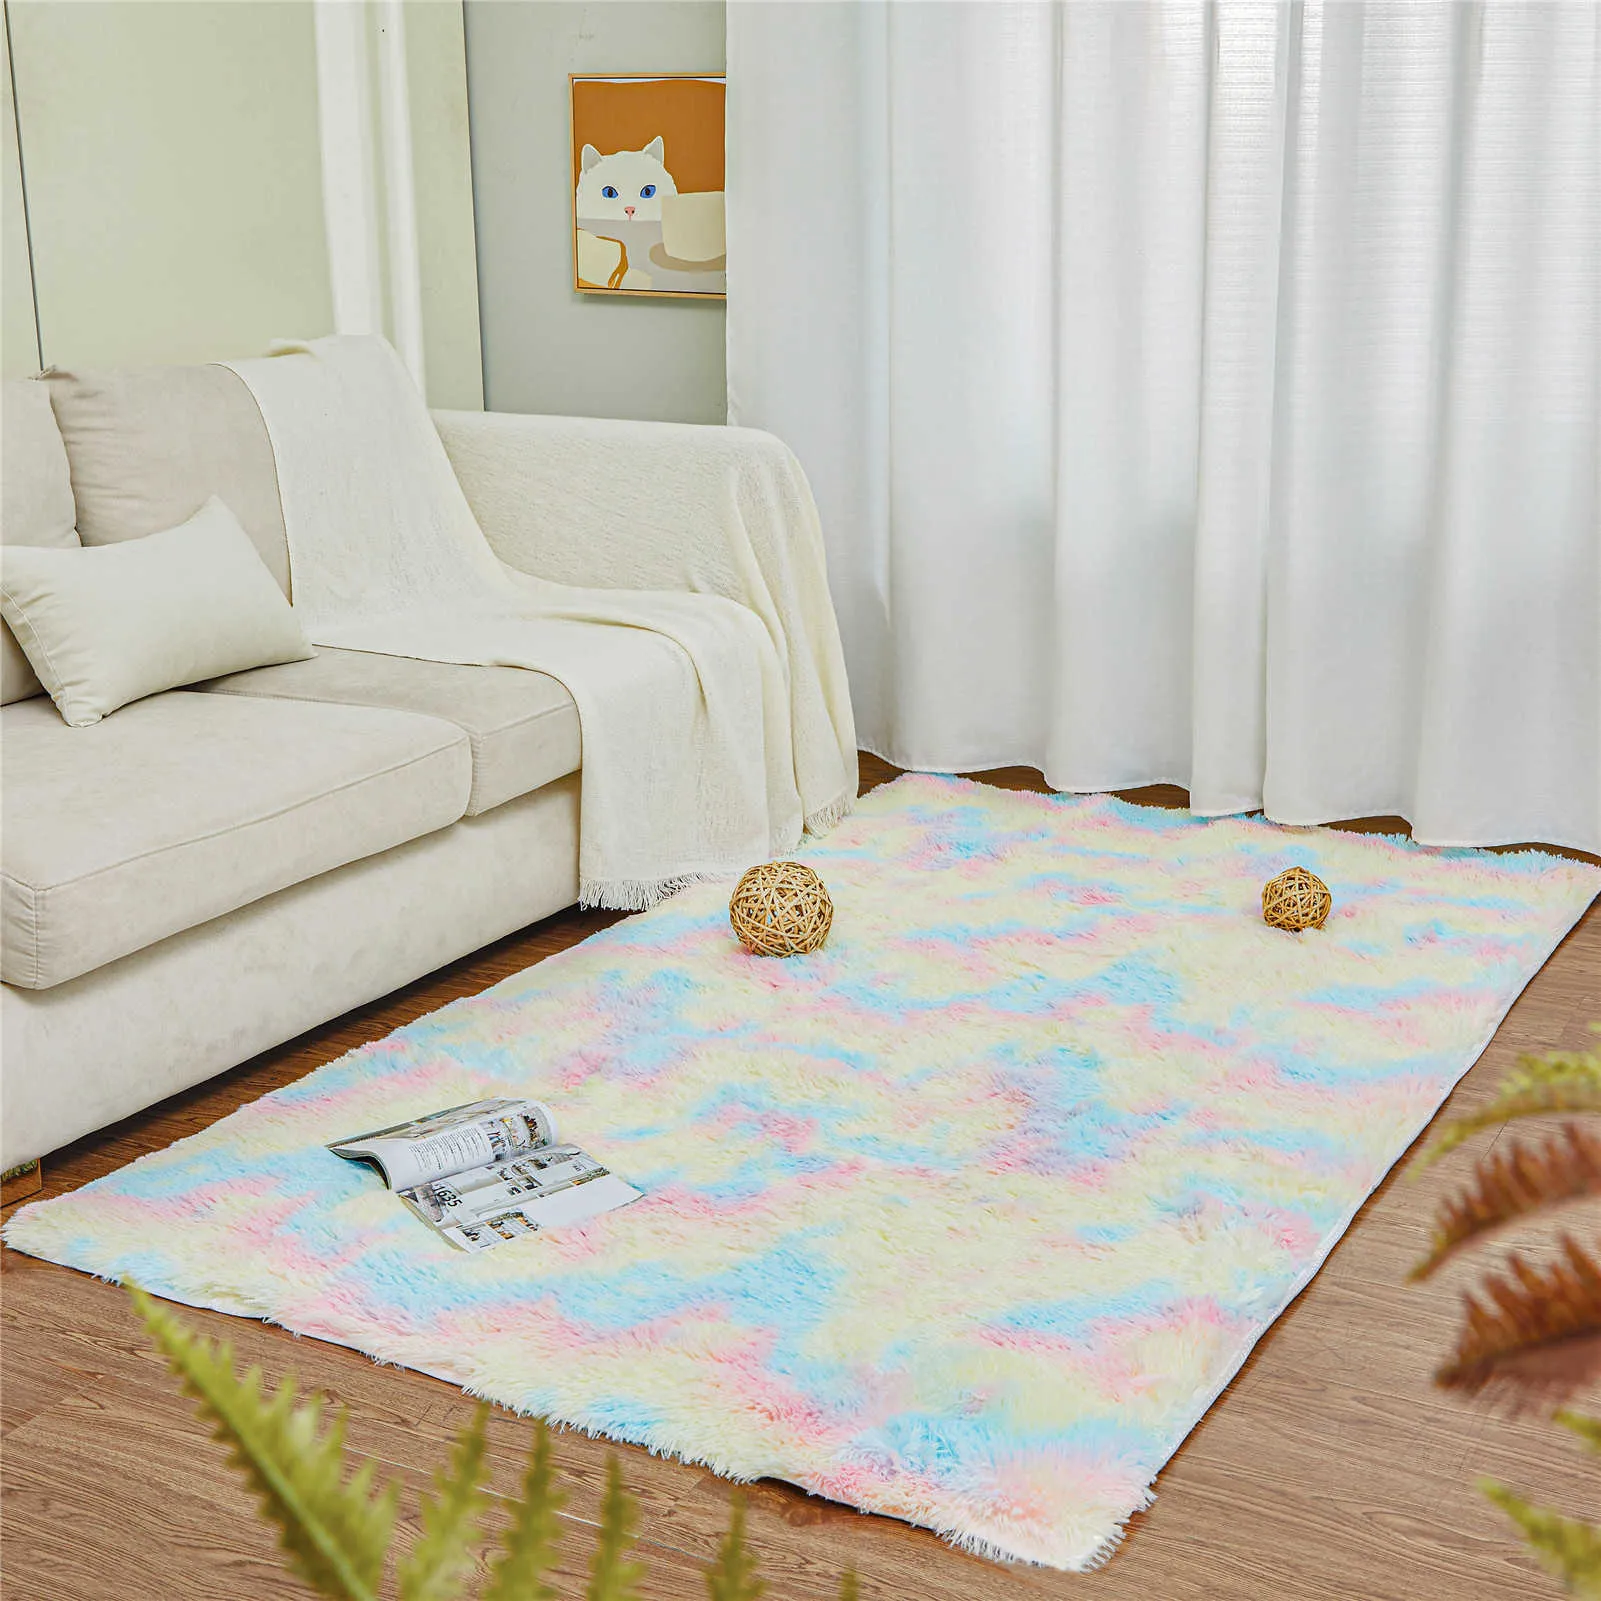 Topfinel Carpets Fluffy Rugs For Living Room Mat Bedroom Bedside Plush Carpet Floor Grey Kids Home Decor Baby Crawling 210626